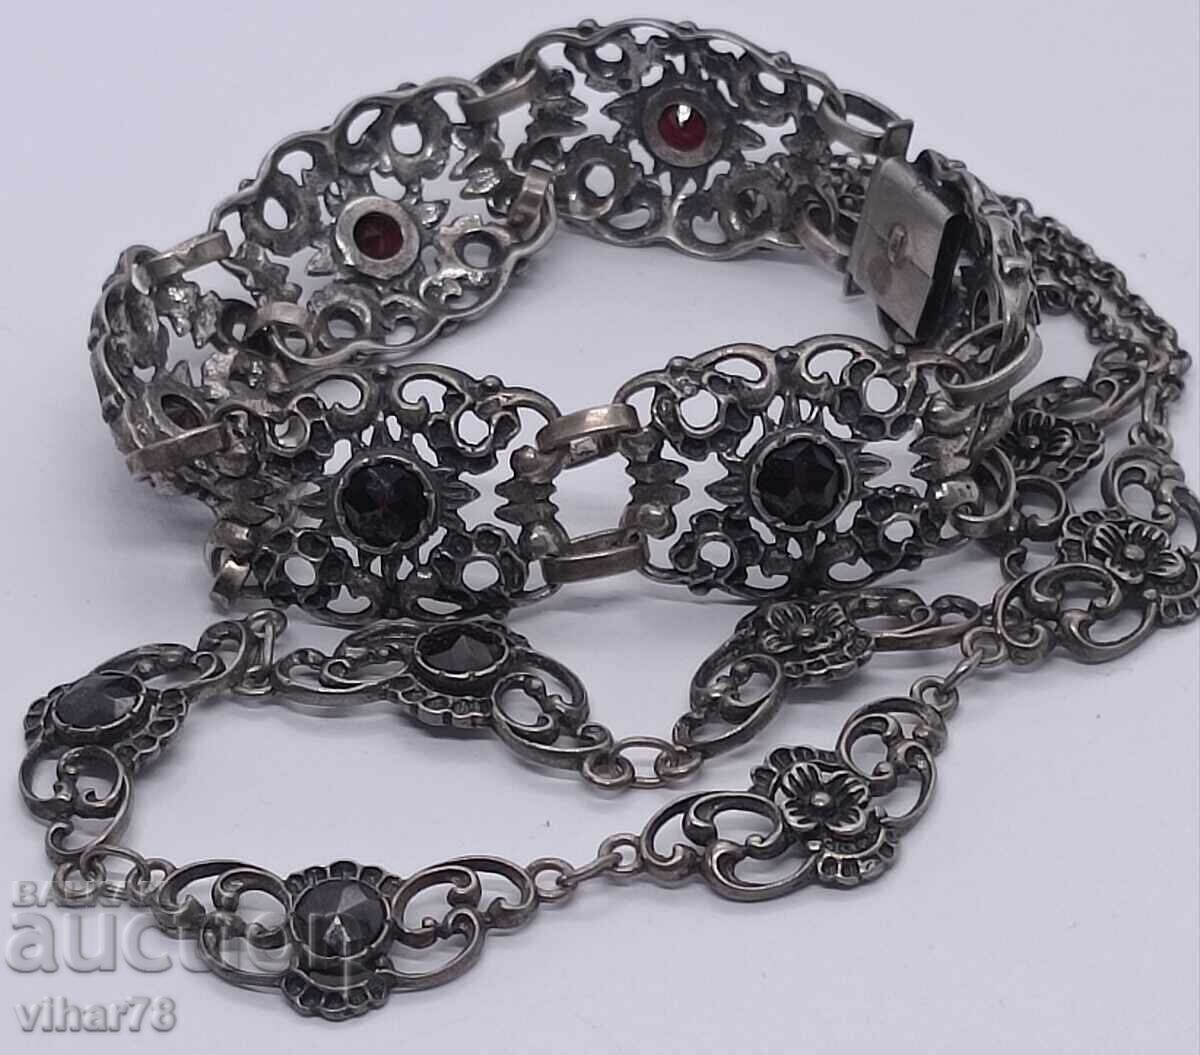 STAT SILVER Set with garnet necklace and bracelet